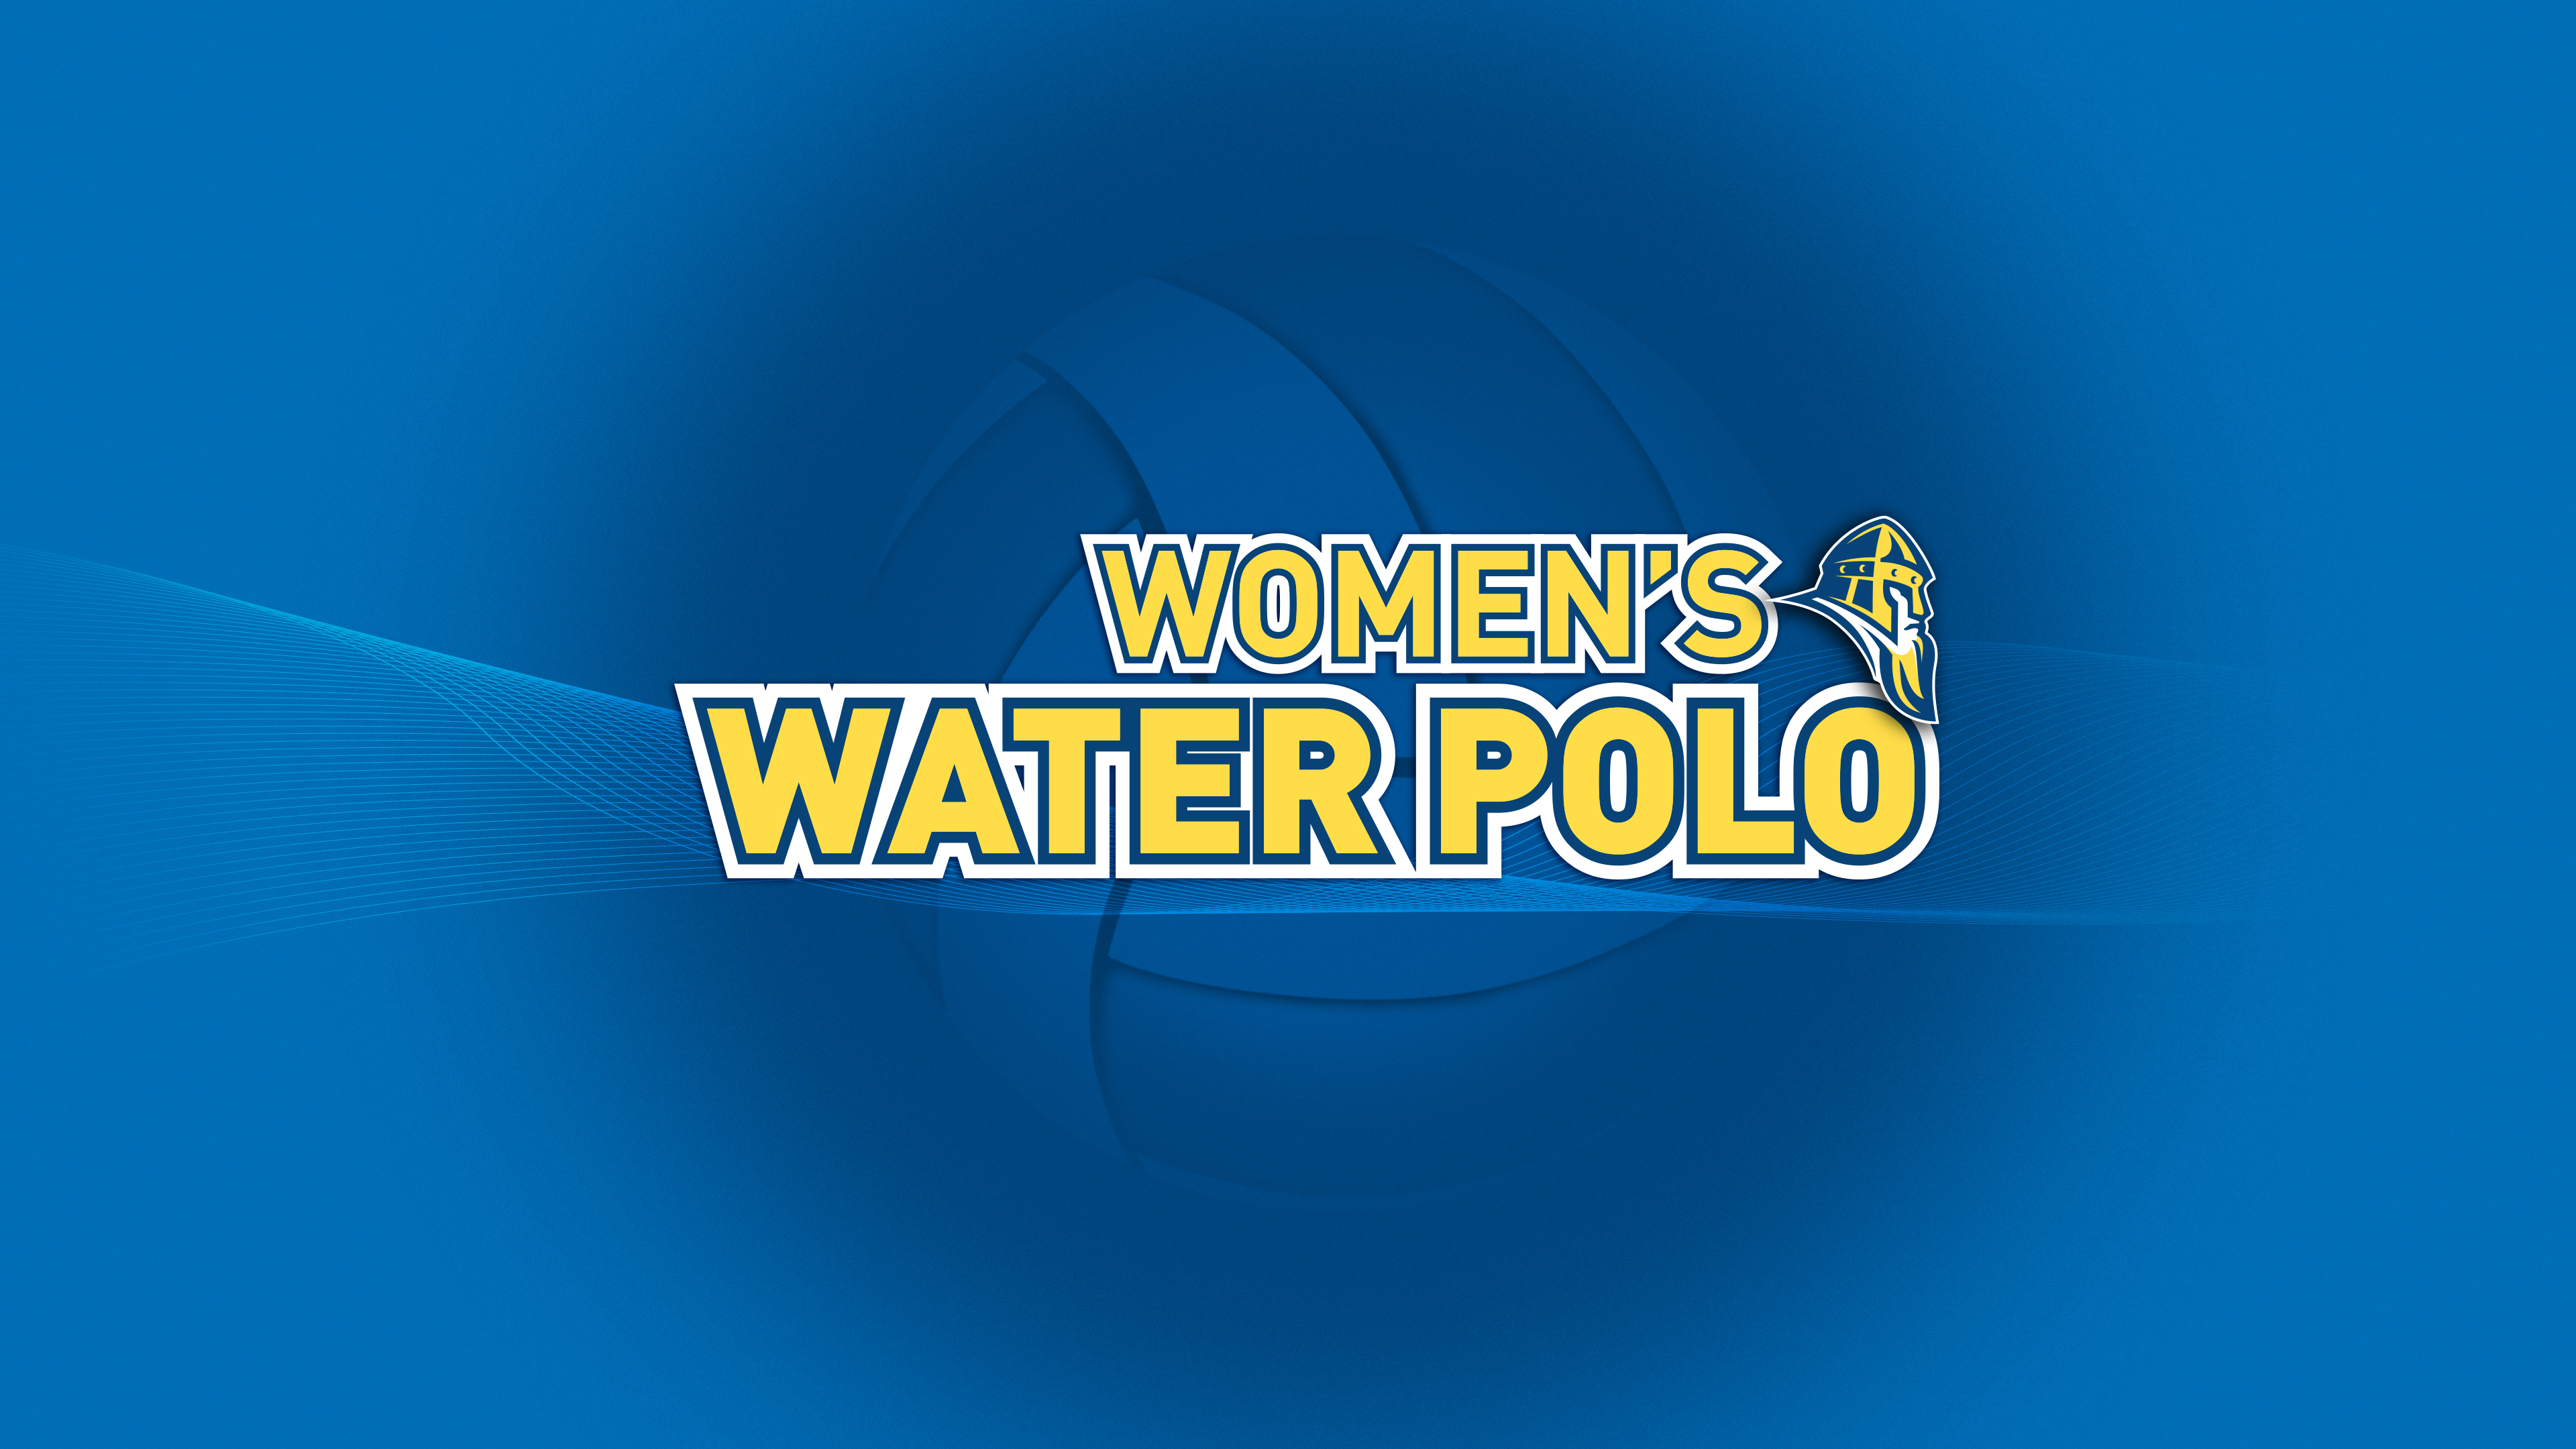 Women's water polo